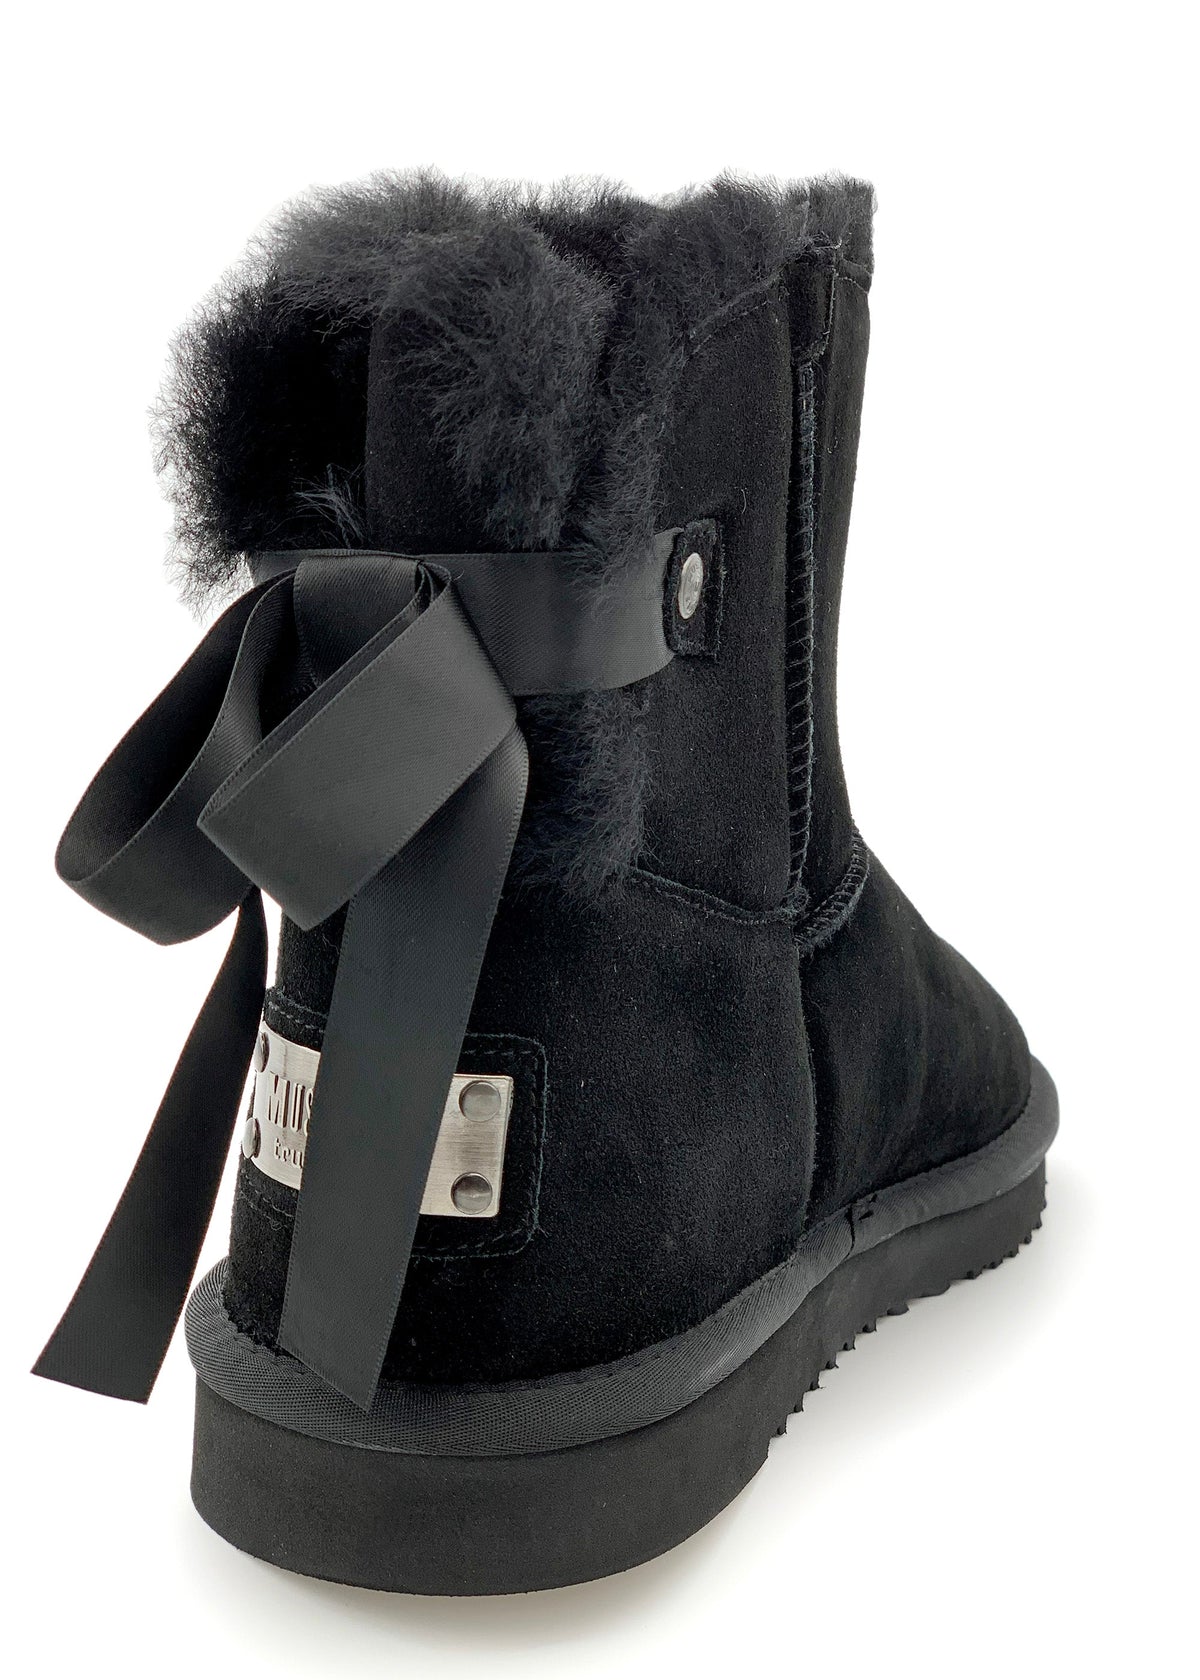 Warm winter boots - black